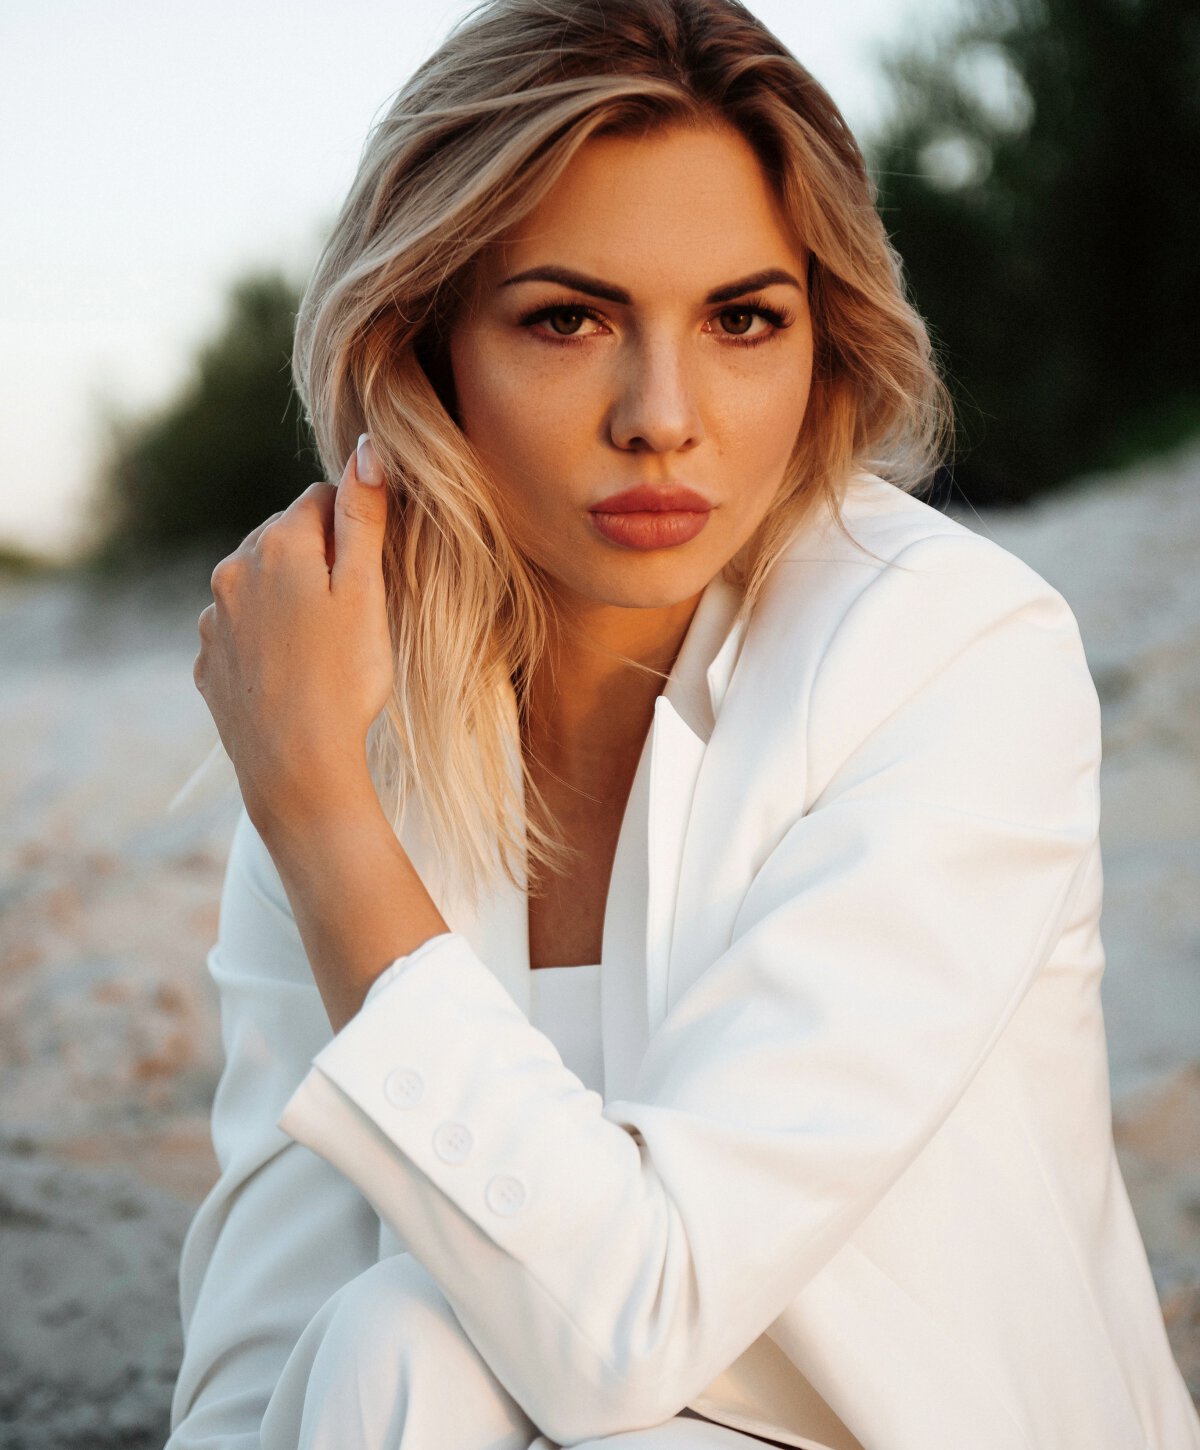 Carolina botox model in white outfit